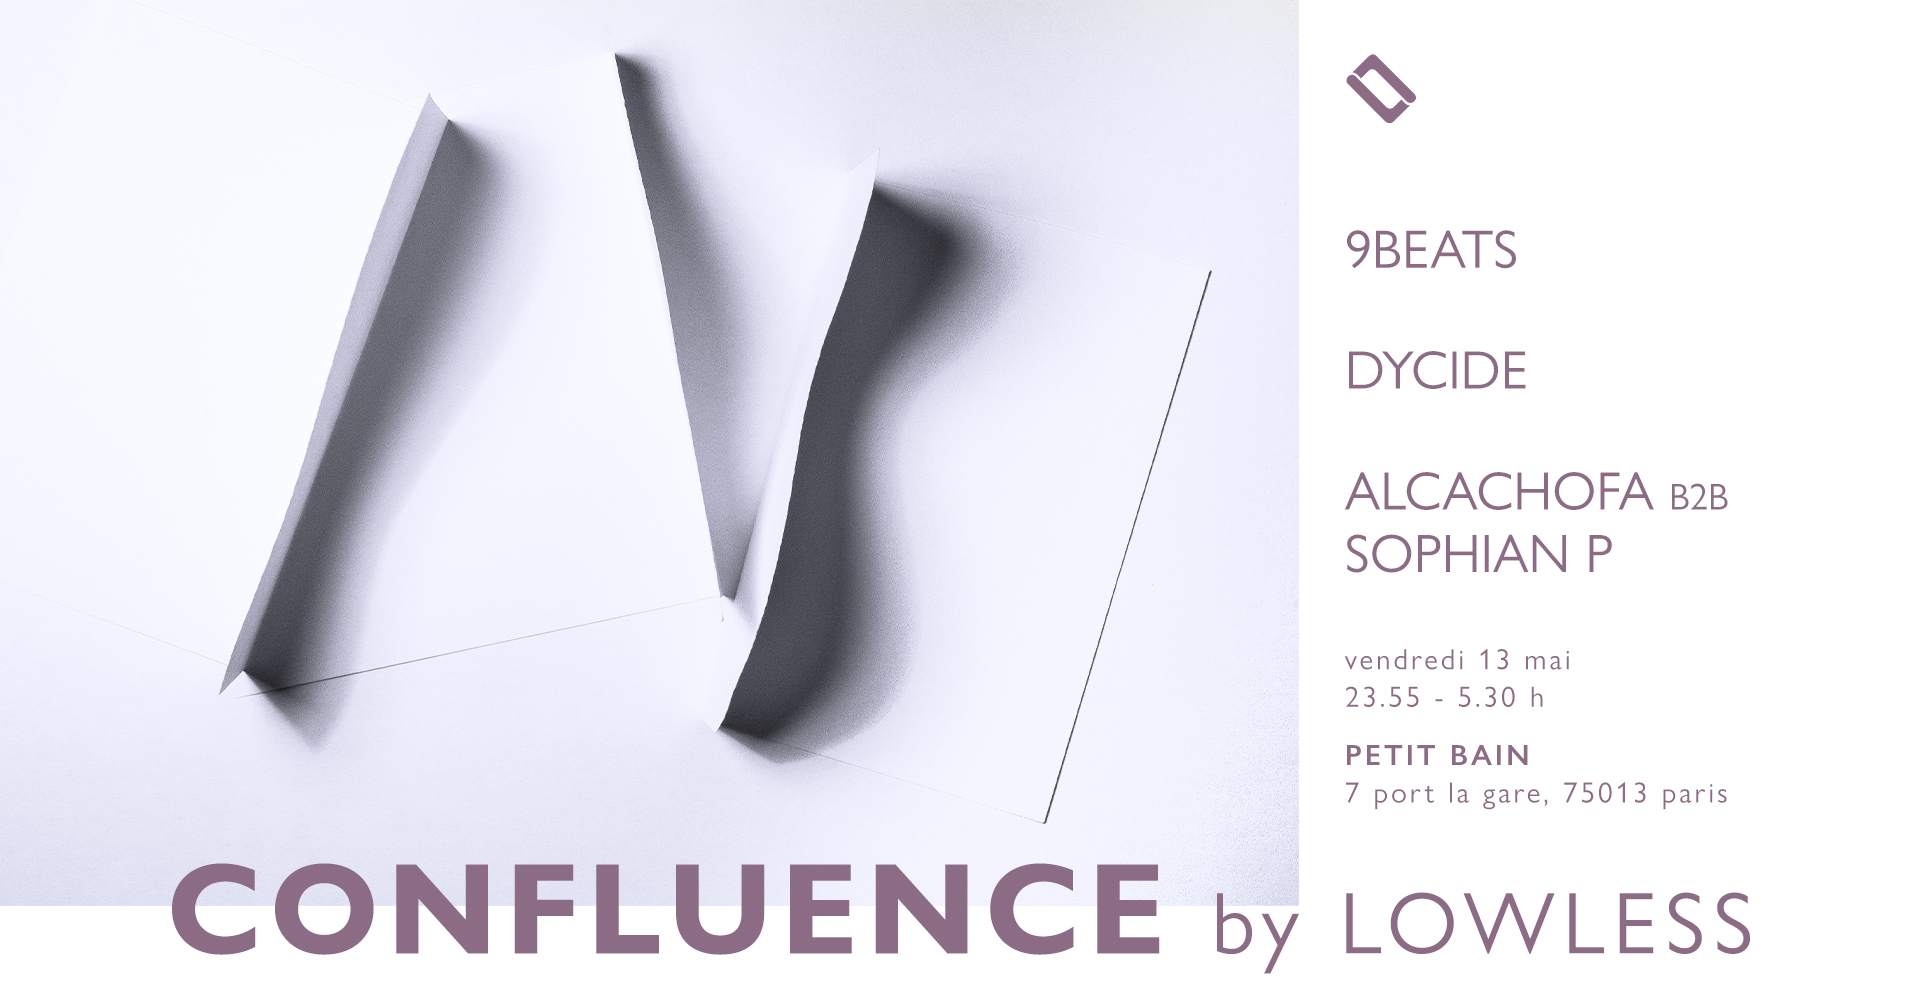 Confluence by Lowless: Dycide, 9beats, Alcachofa b2b Sophian P - フライヤー表